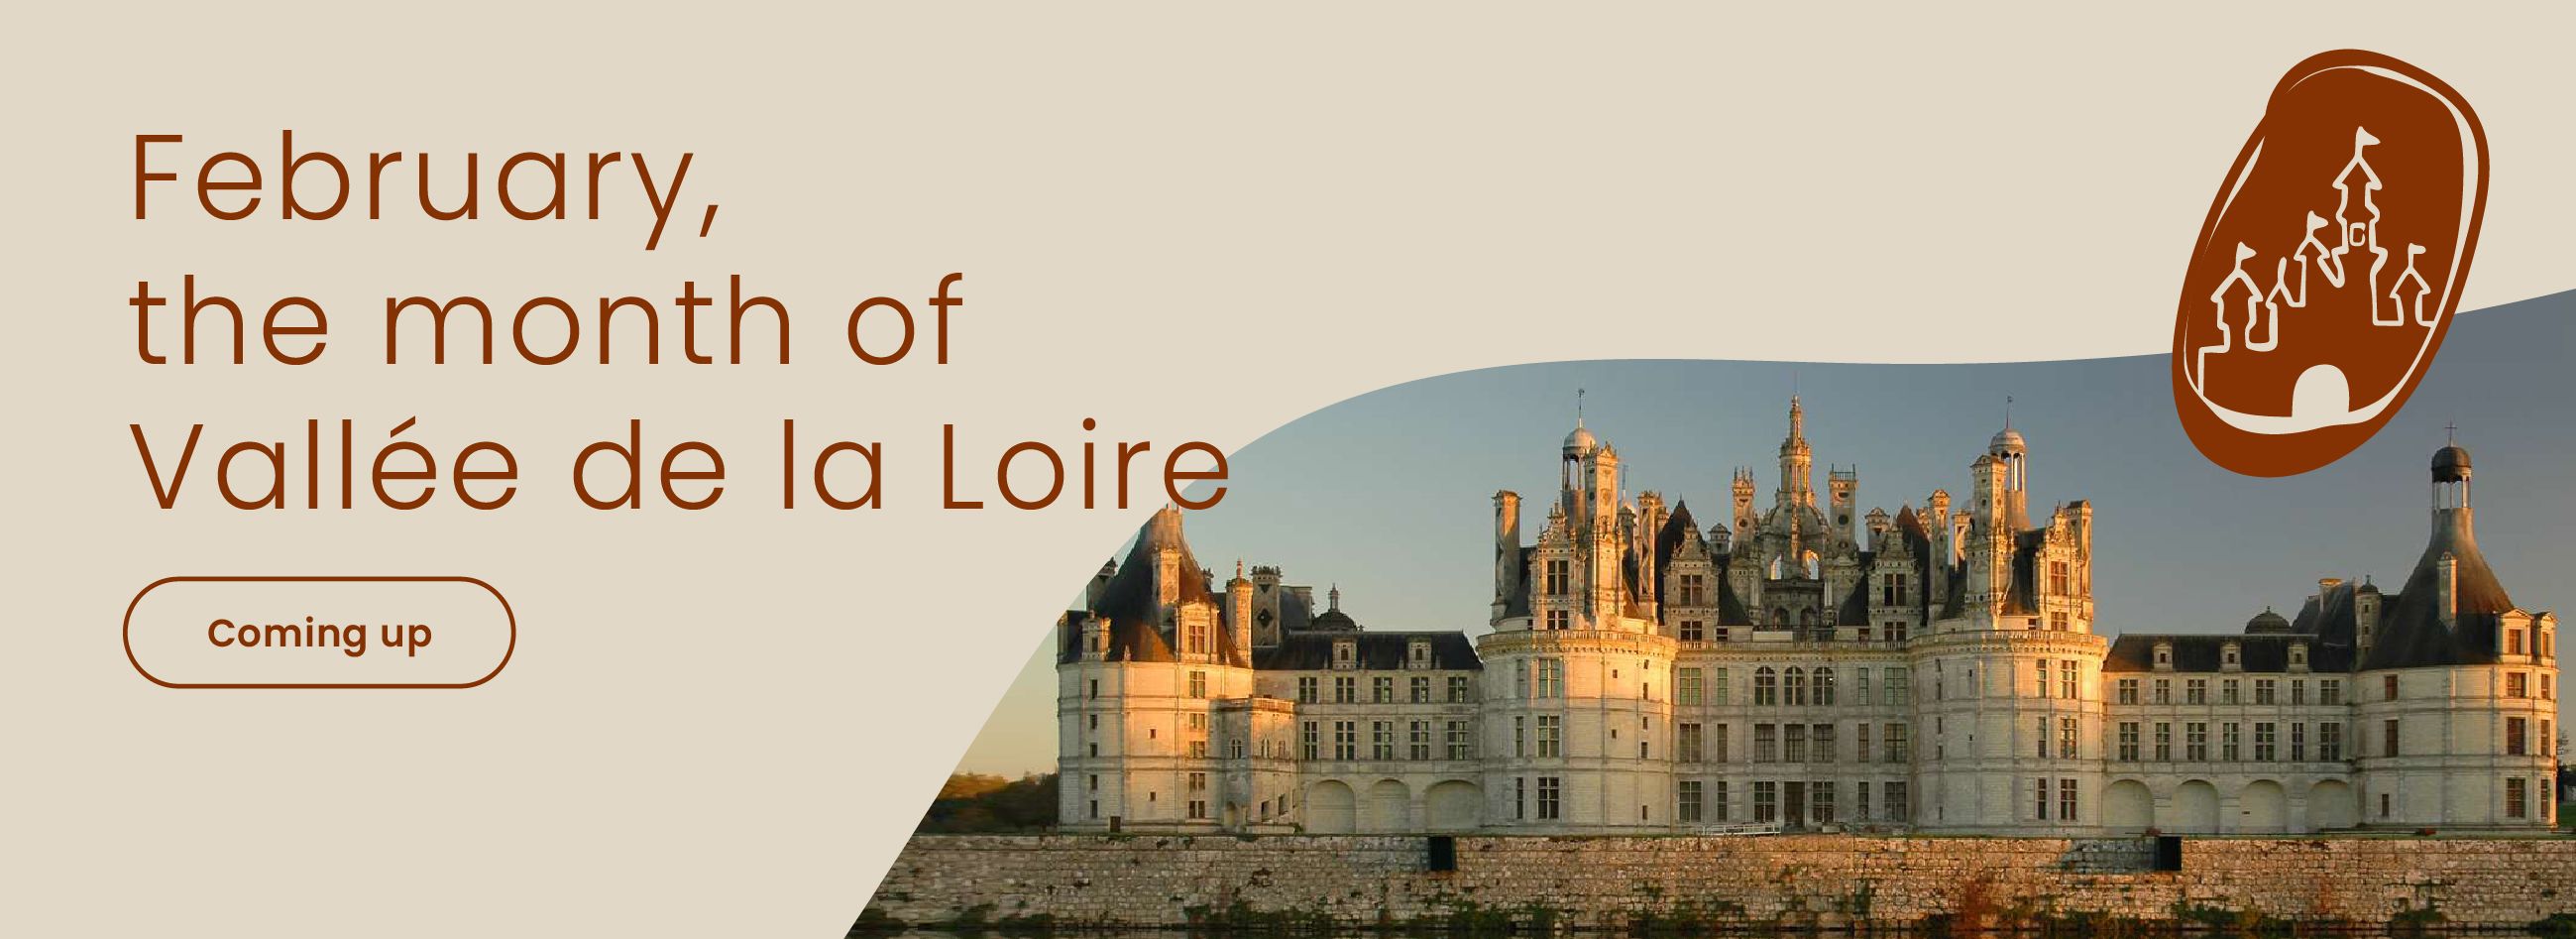 Loire valley month